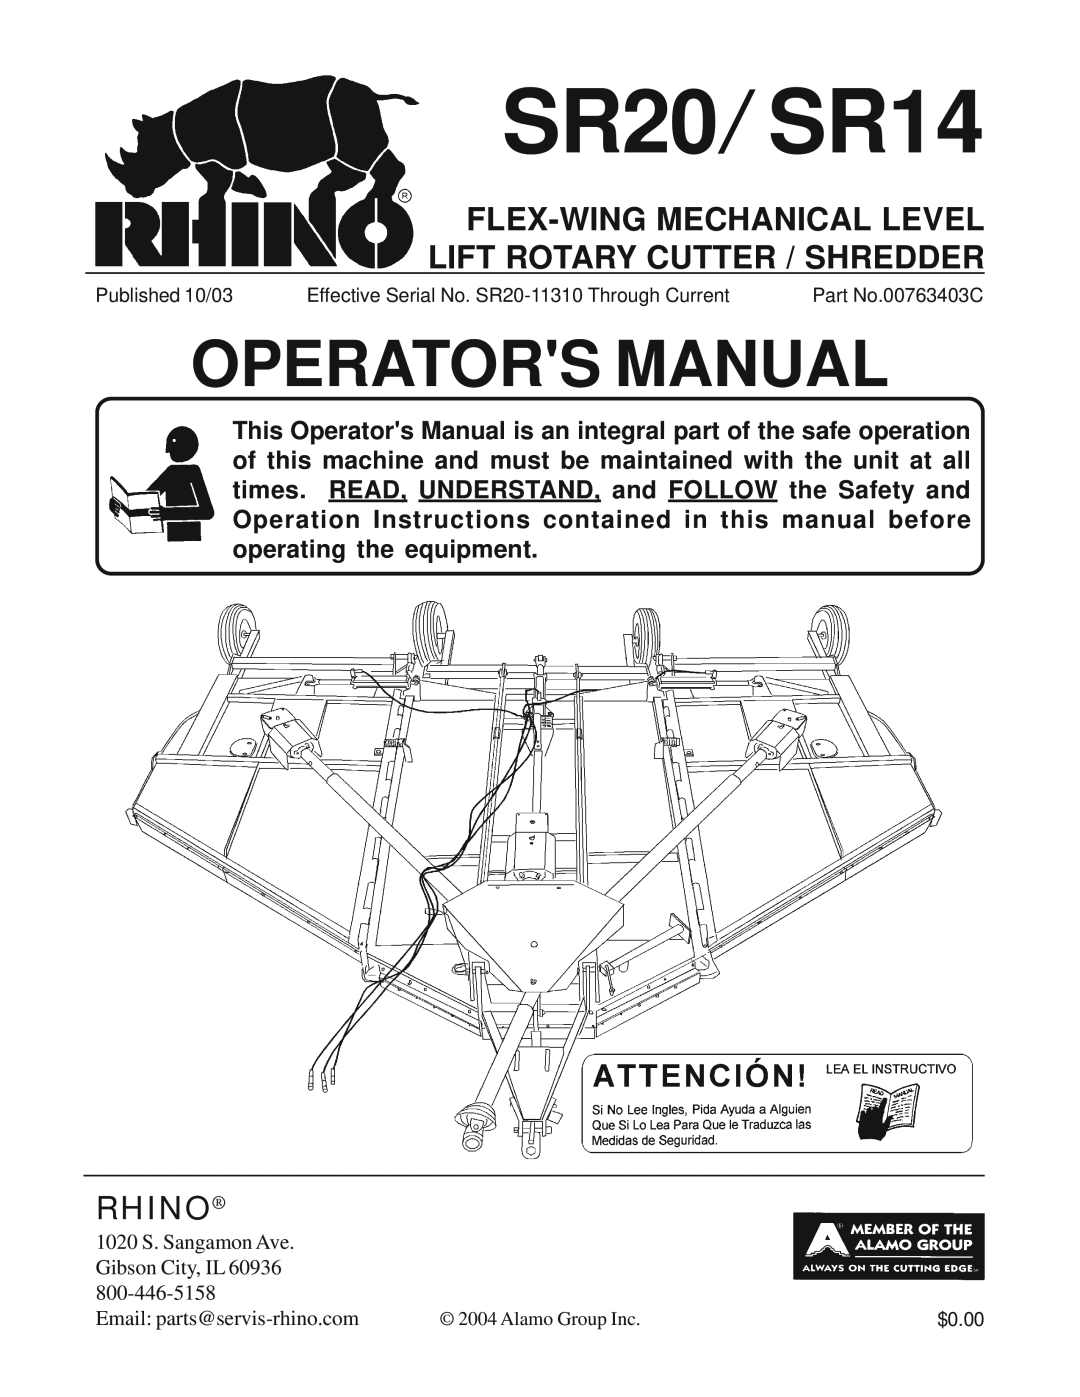 Alamo manual Operators Manual, Flex-Wing Mechanical Level Lift Rotary Cutter / Shredder, Rhino, SR20/ SR14 